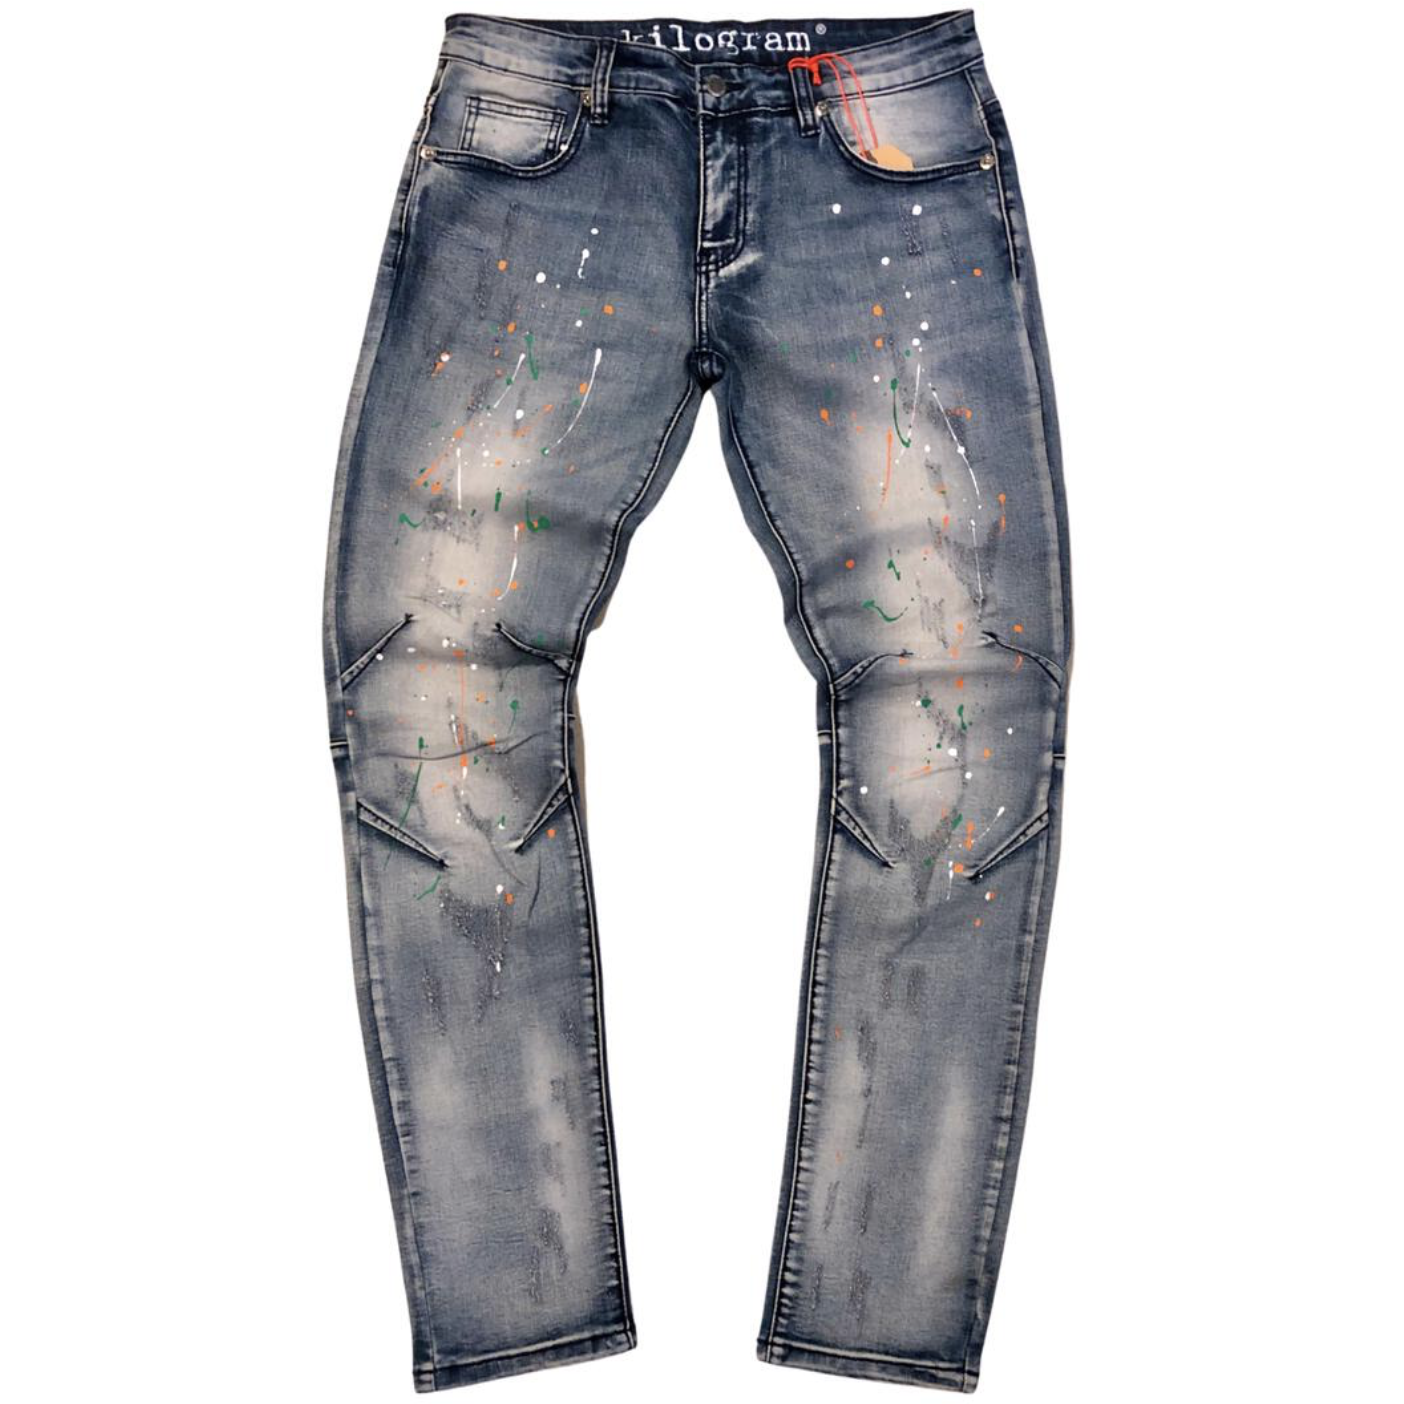 Kilogram Faded Blue Paint Splatter Denim Jeans (KG2922)